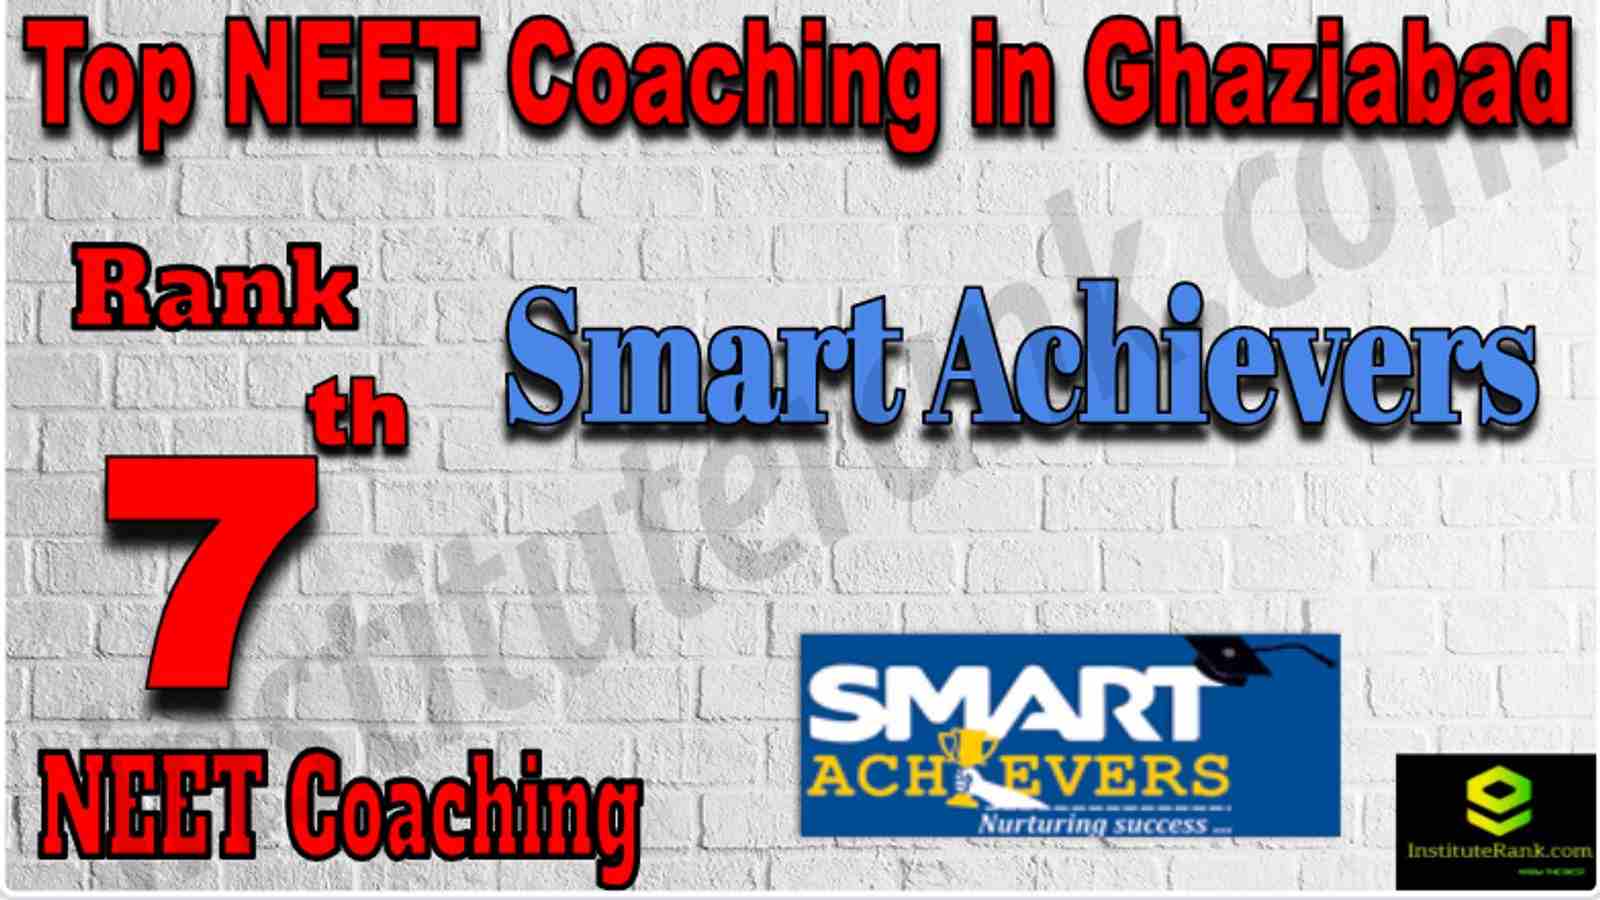 Rank 7 Top NEET Coaching in Ghaziabad